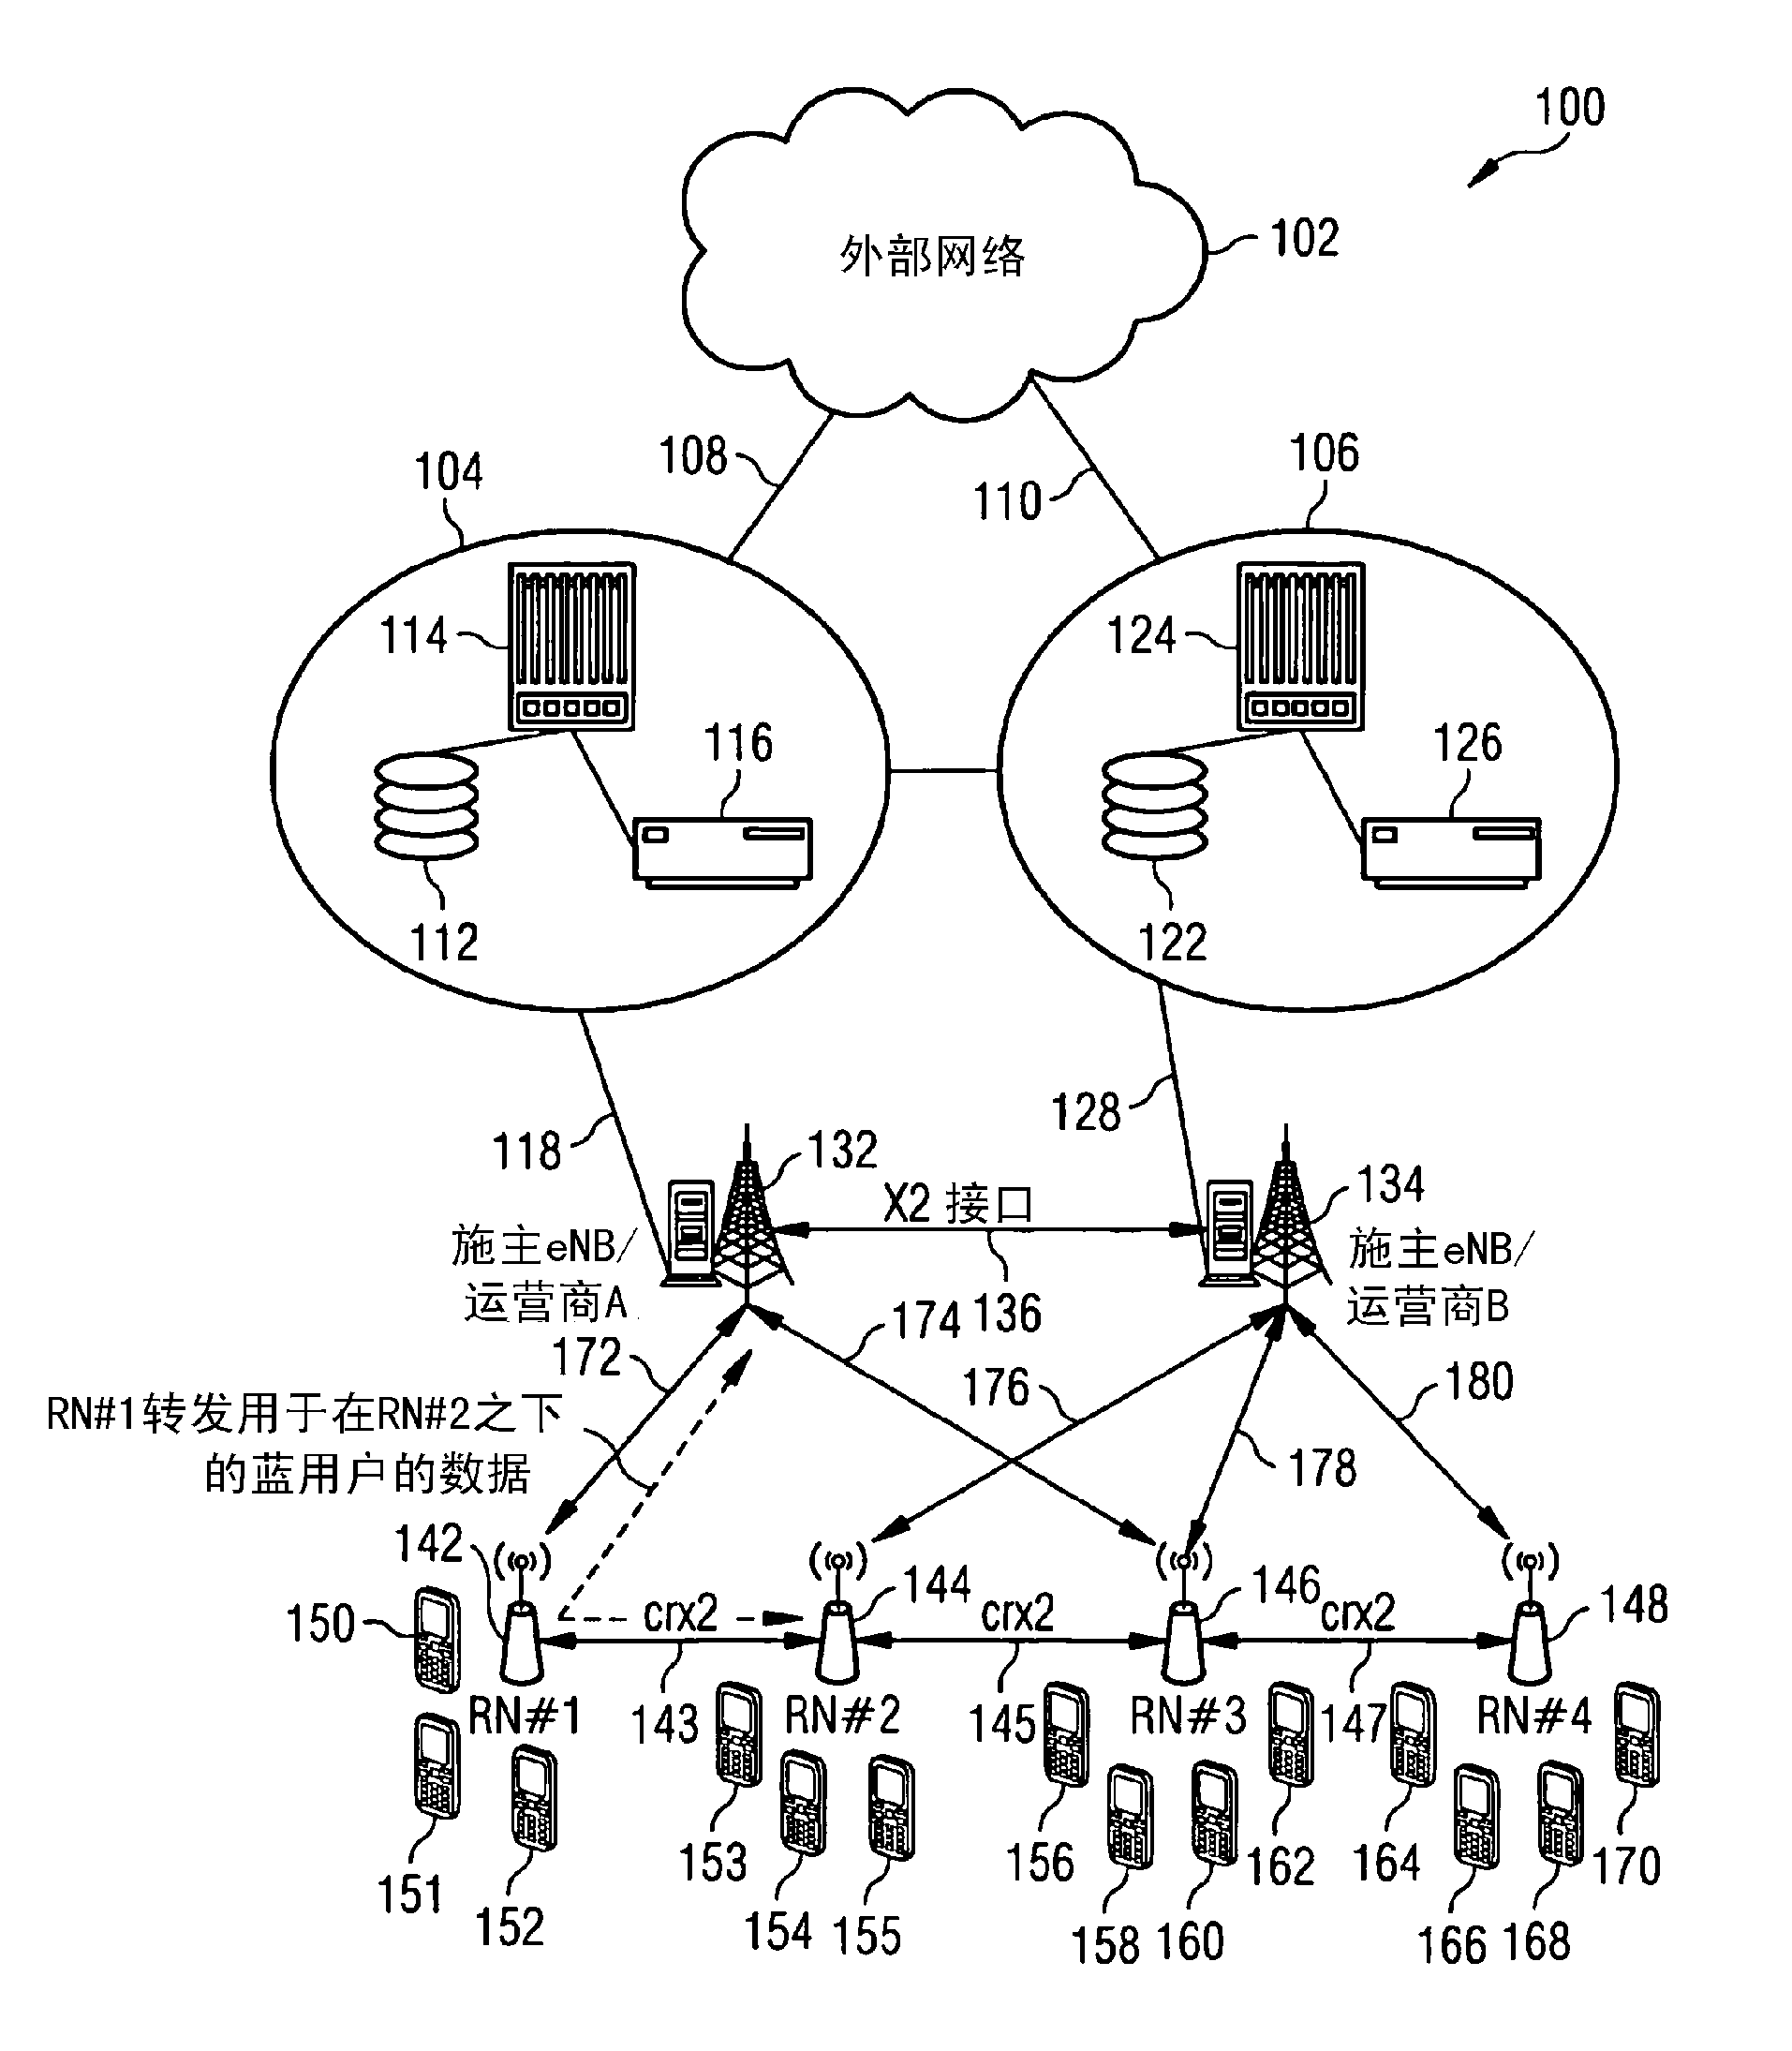 Relay nodes in multi-operator scenario